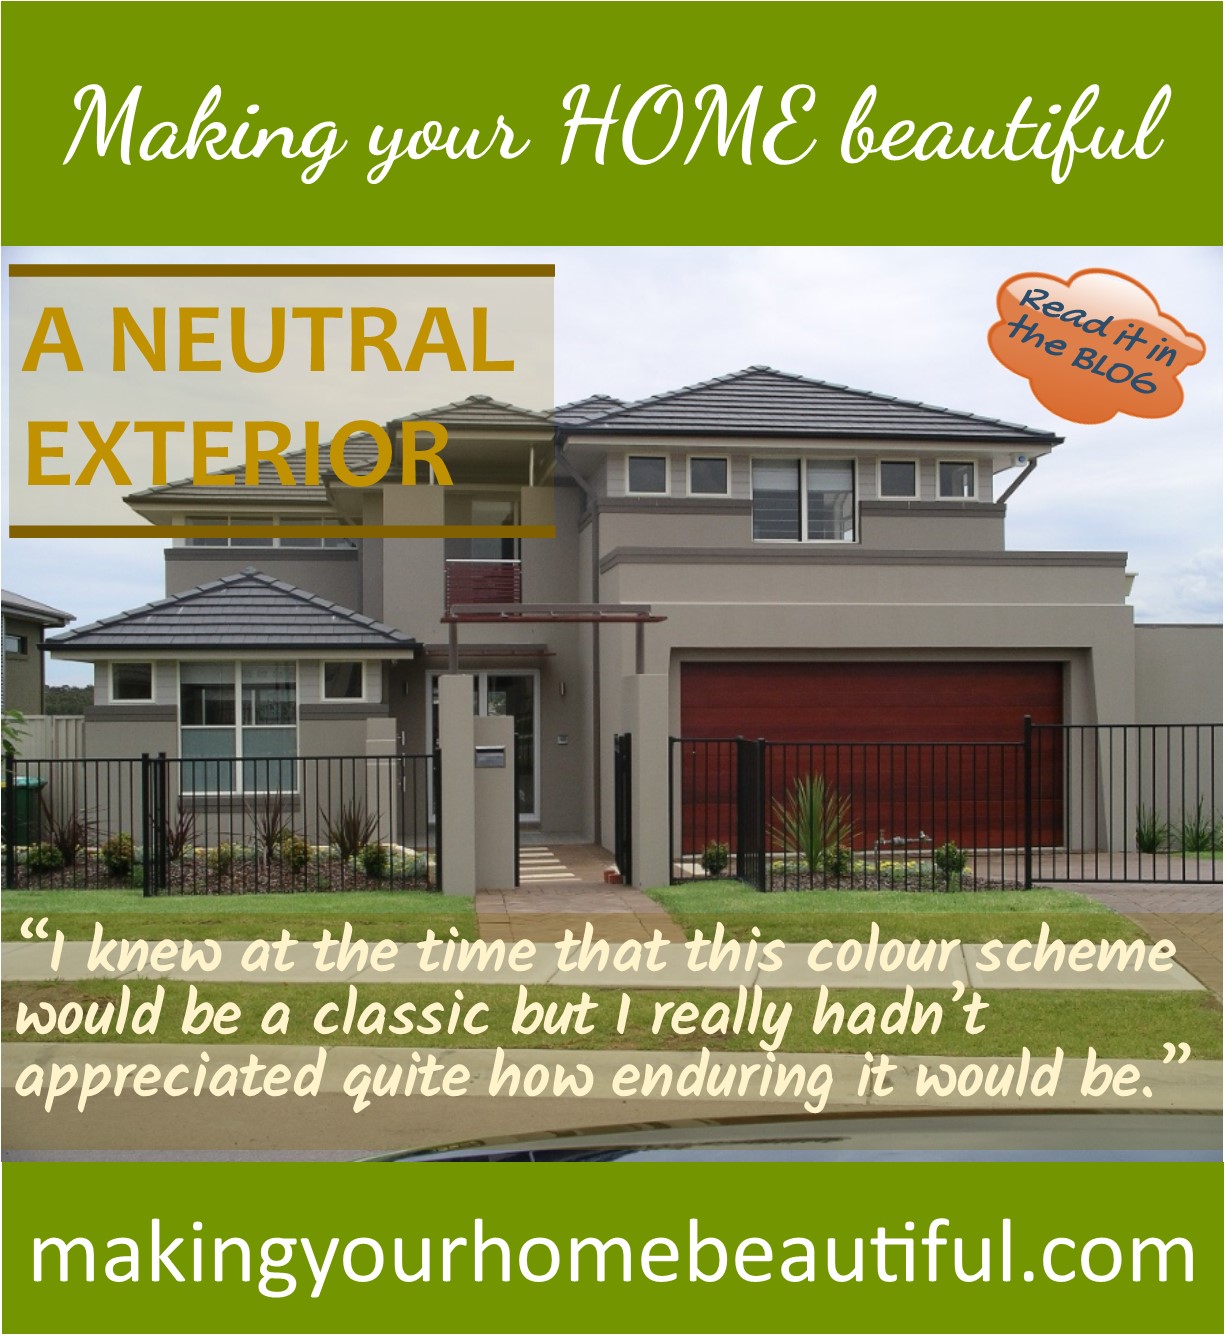 How to achieve a neutral exterior scheme